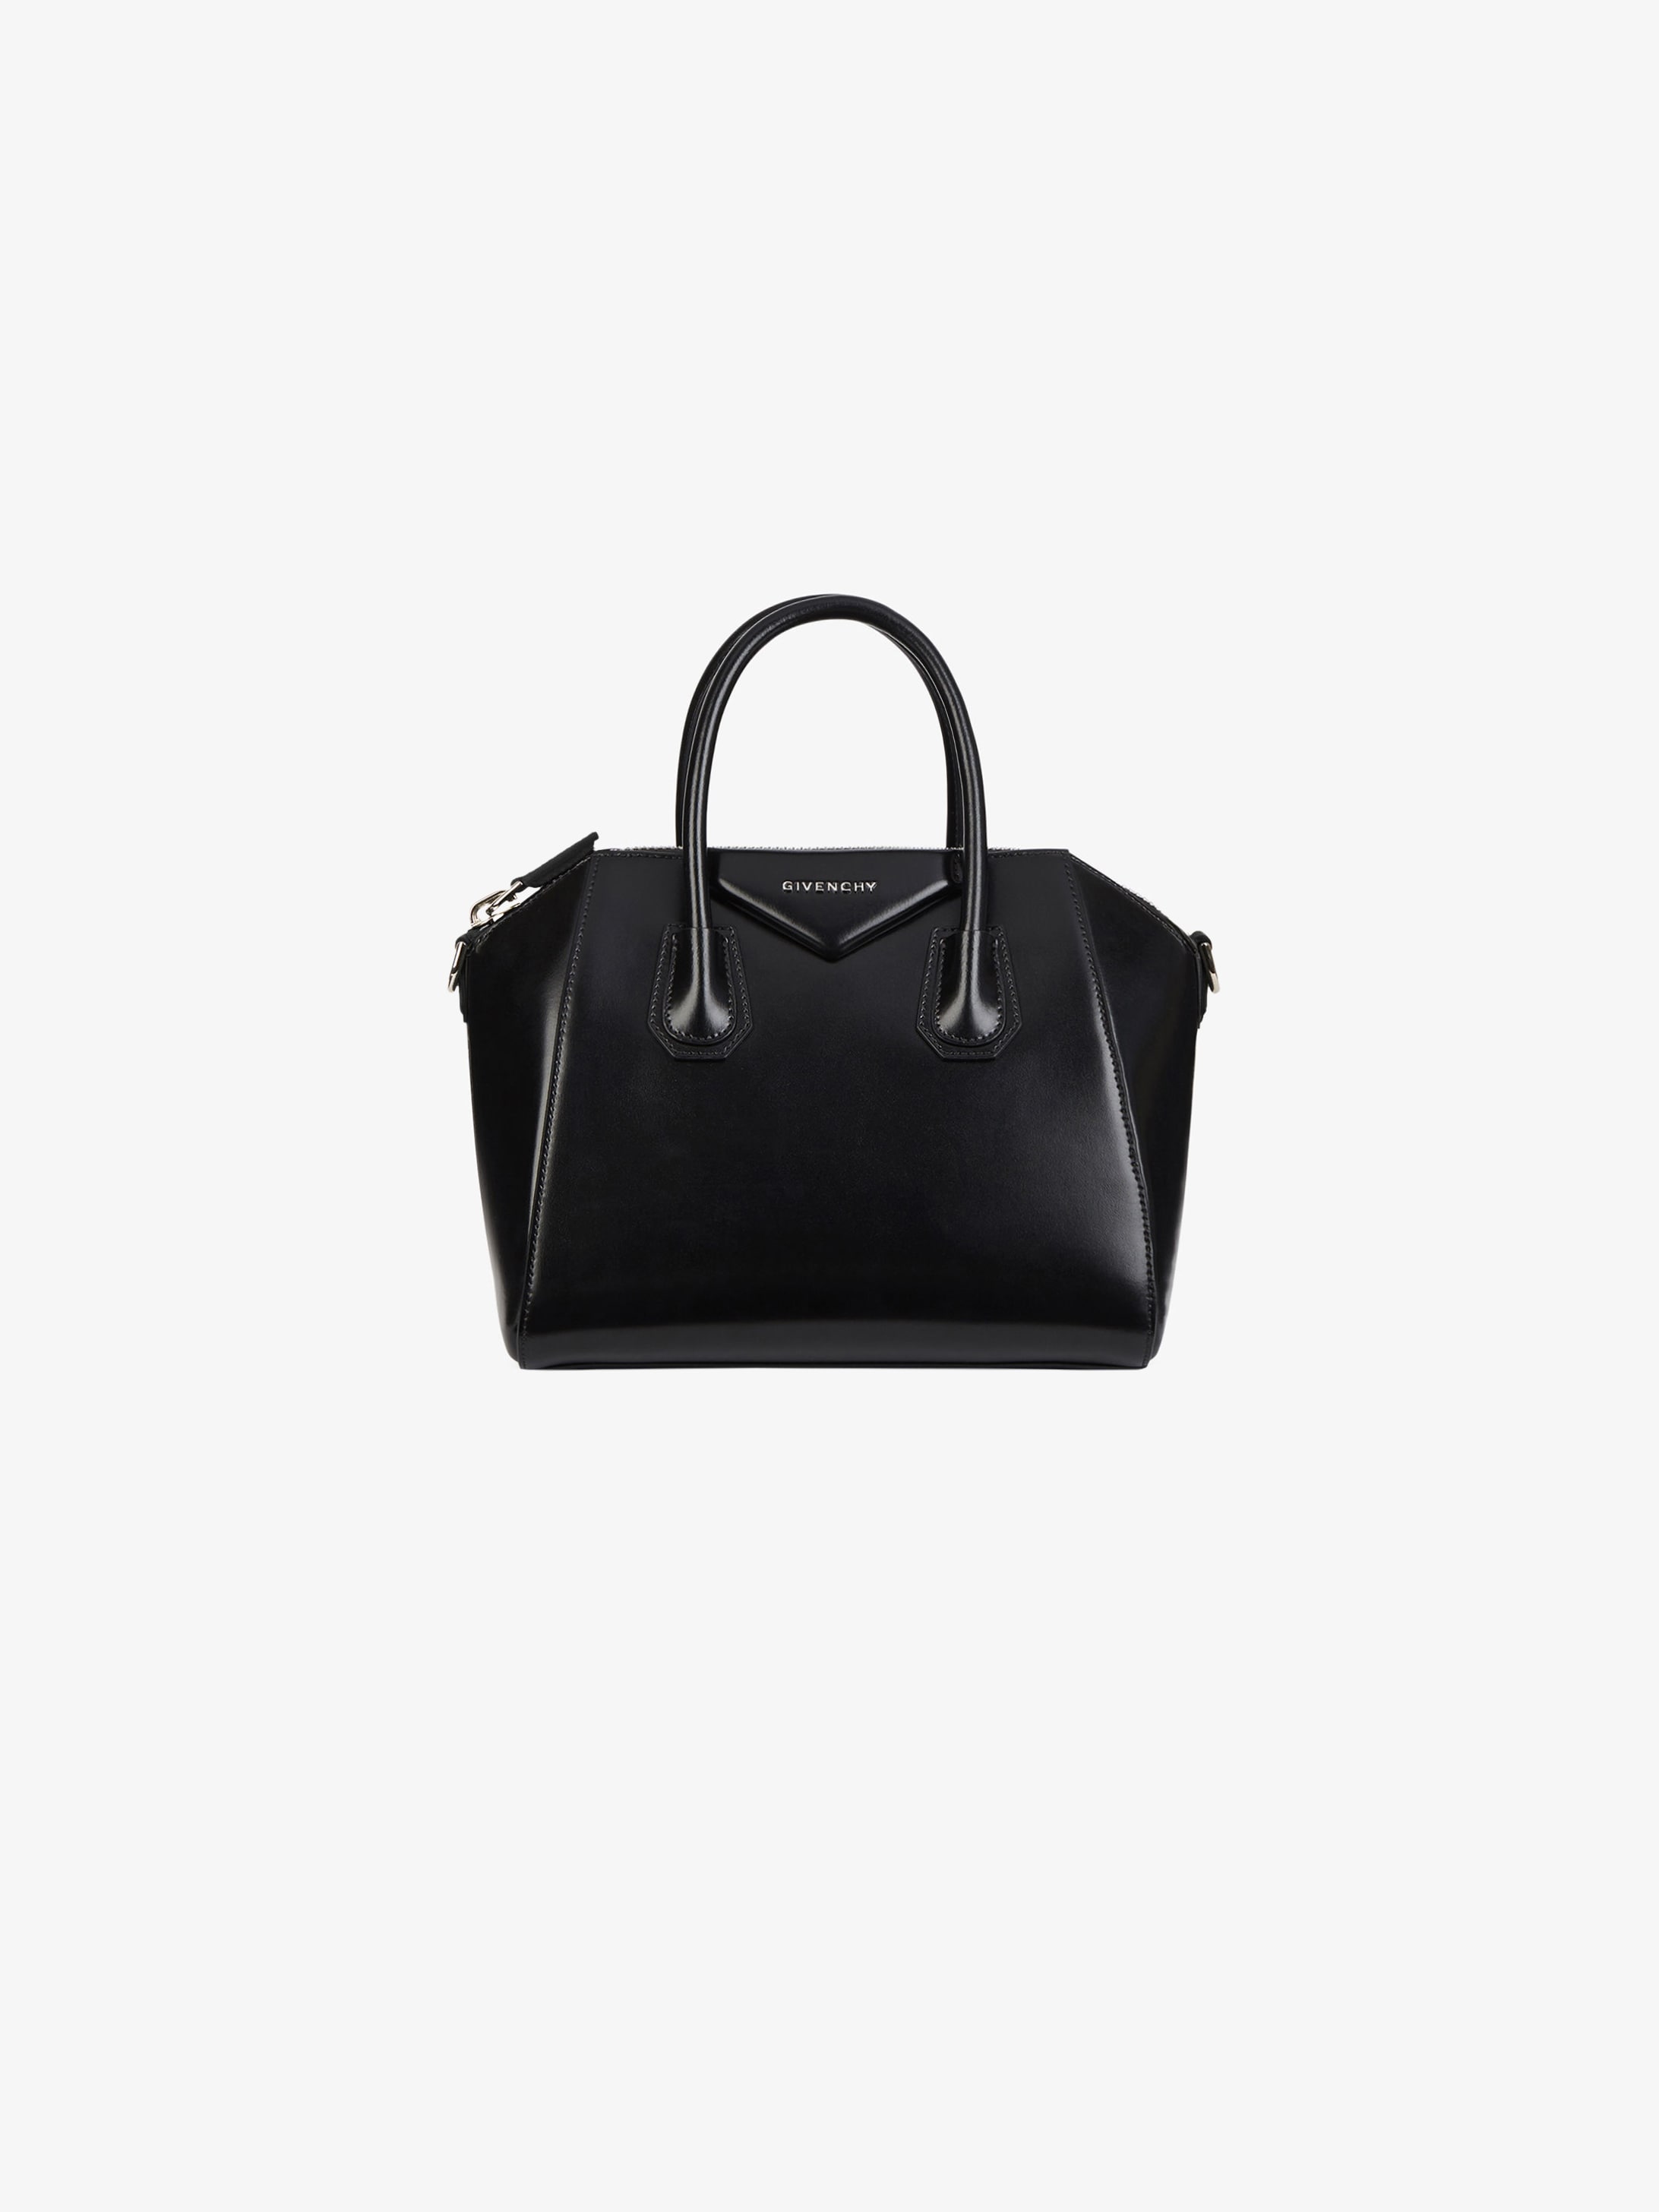 Givenchy Small Antigona bag | GIVENCHY Paris